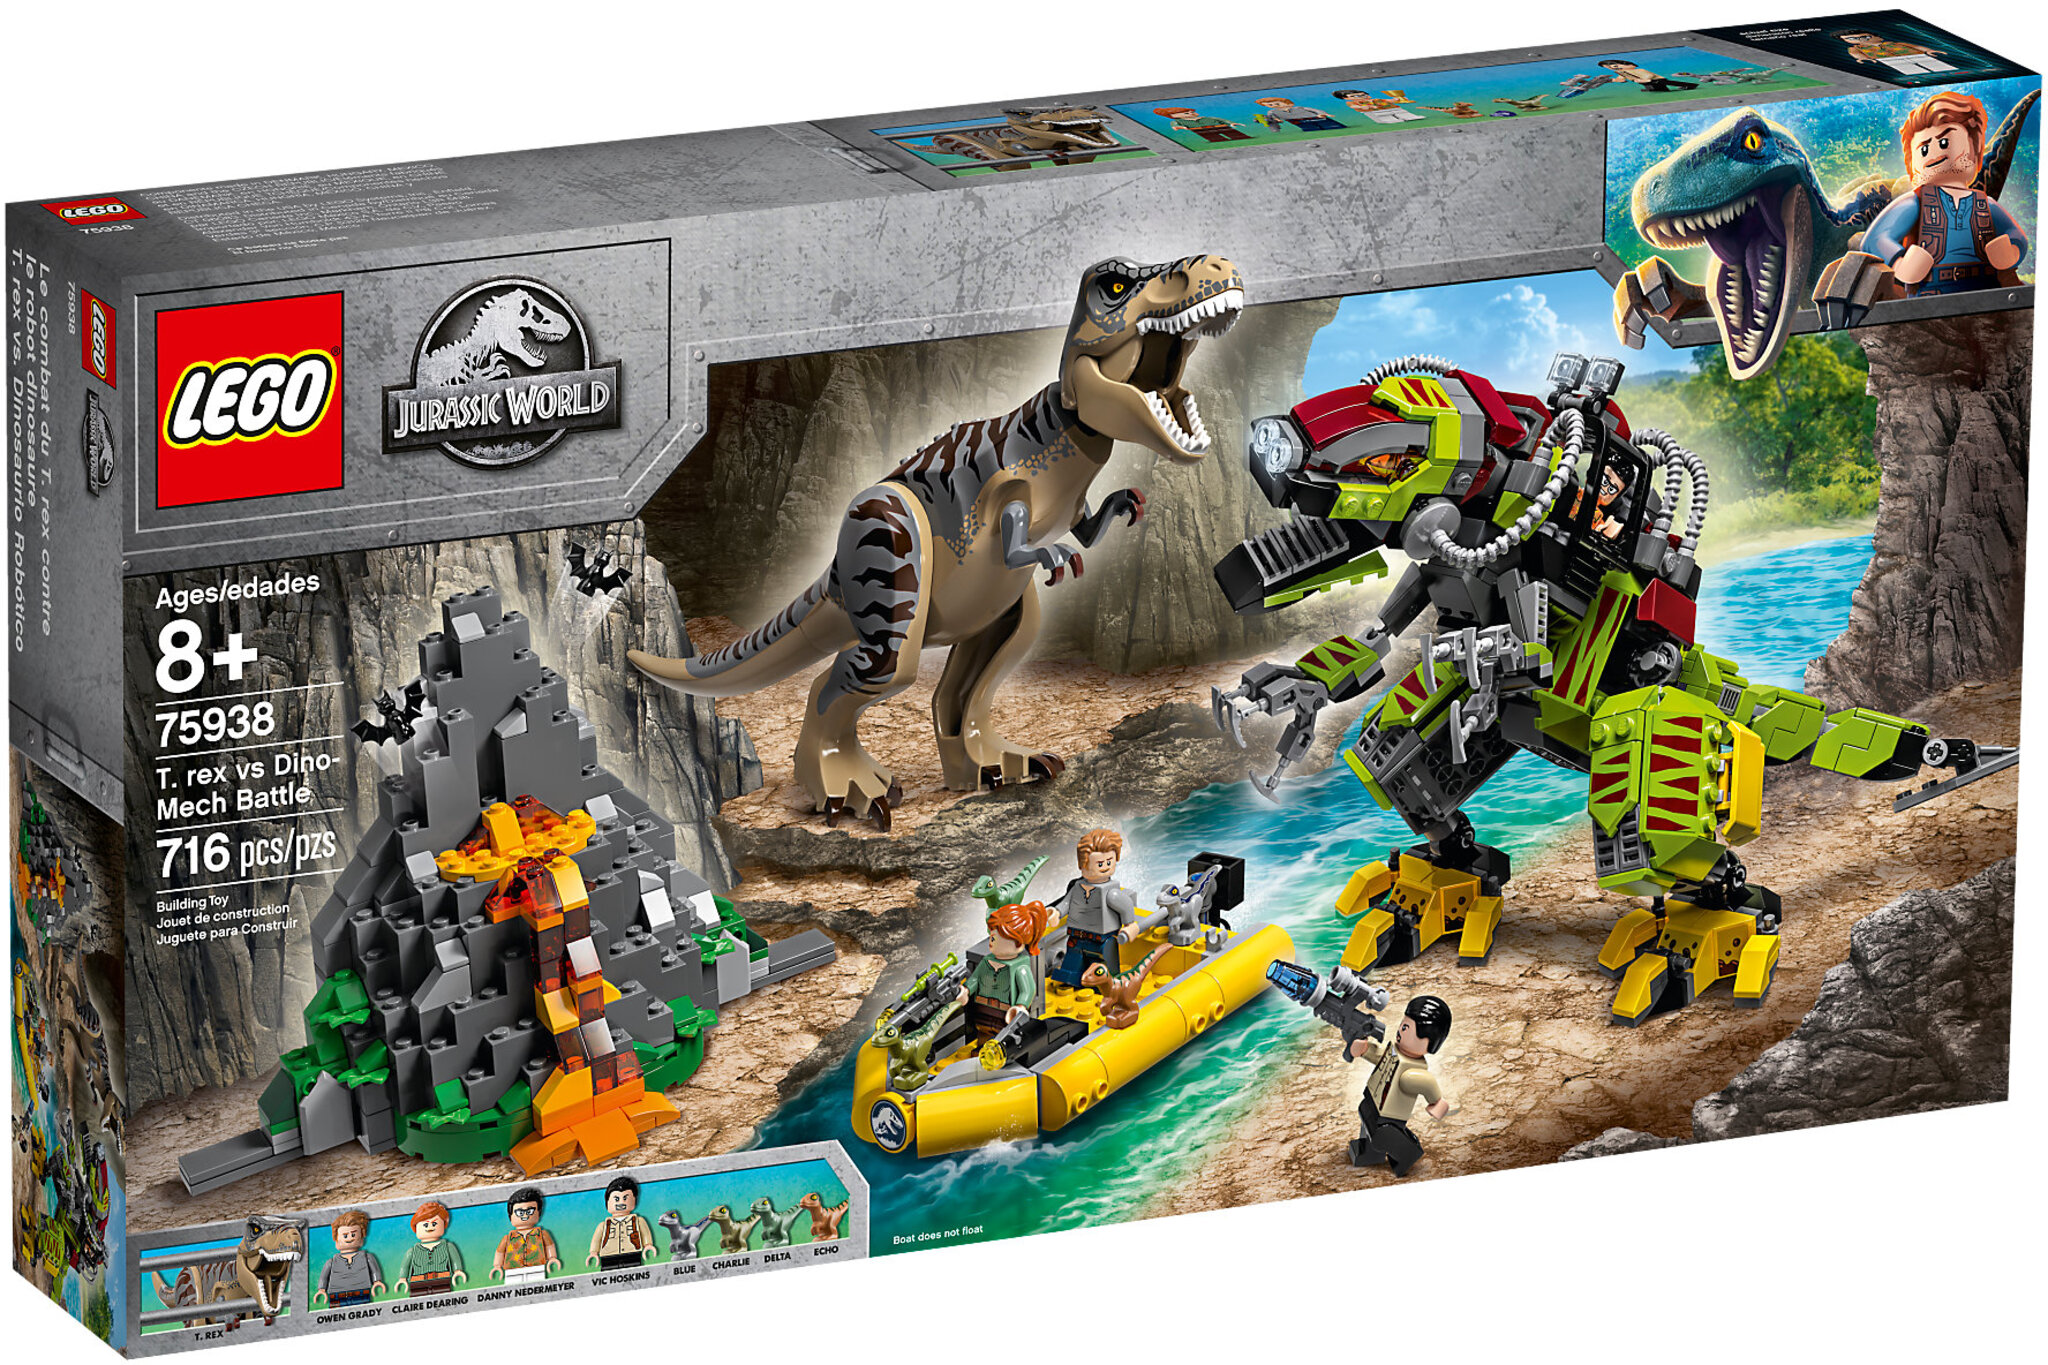 LEGO Jurassic World 75938 - Battaglia Tra T. Rex E Dino Mech